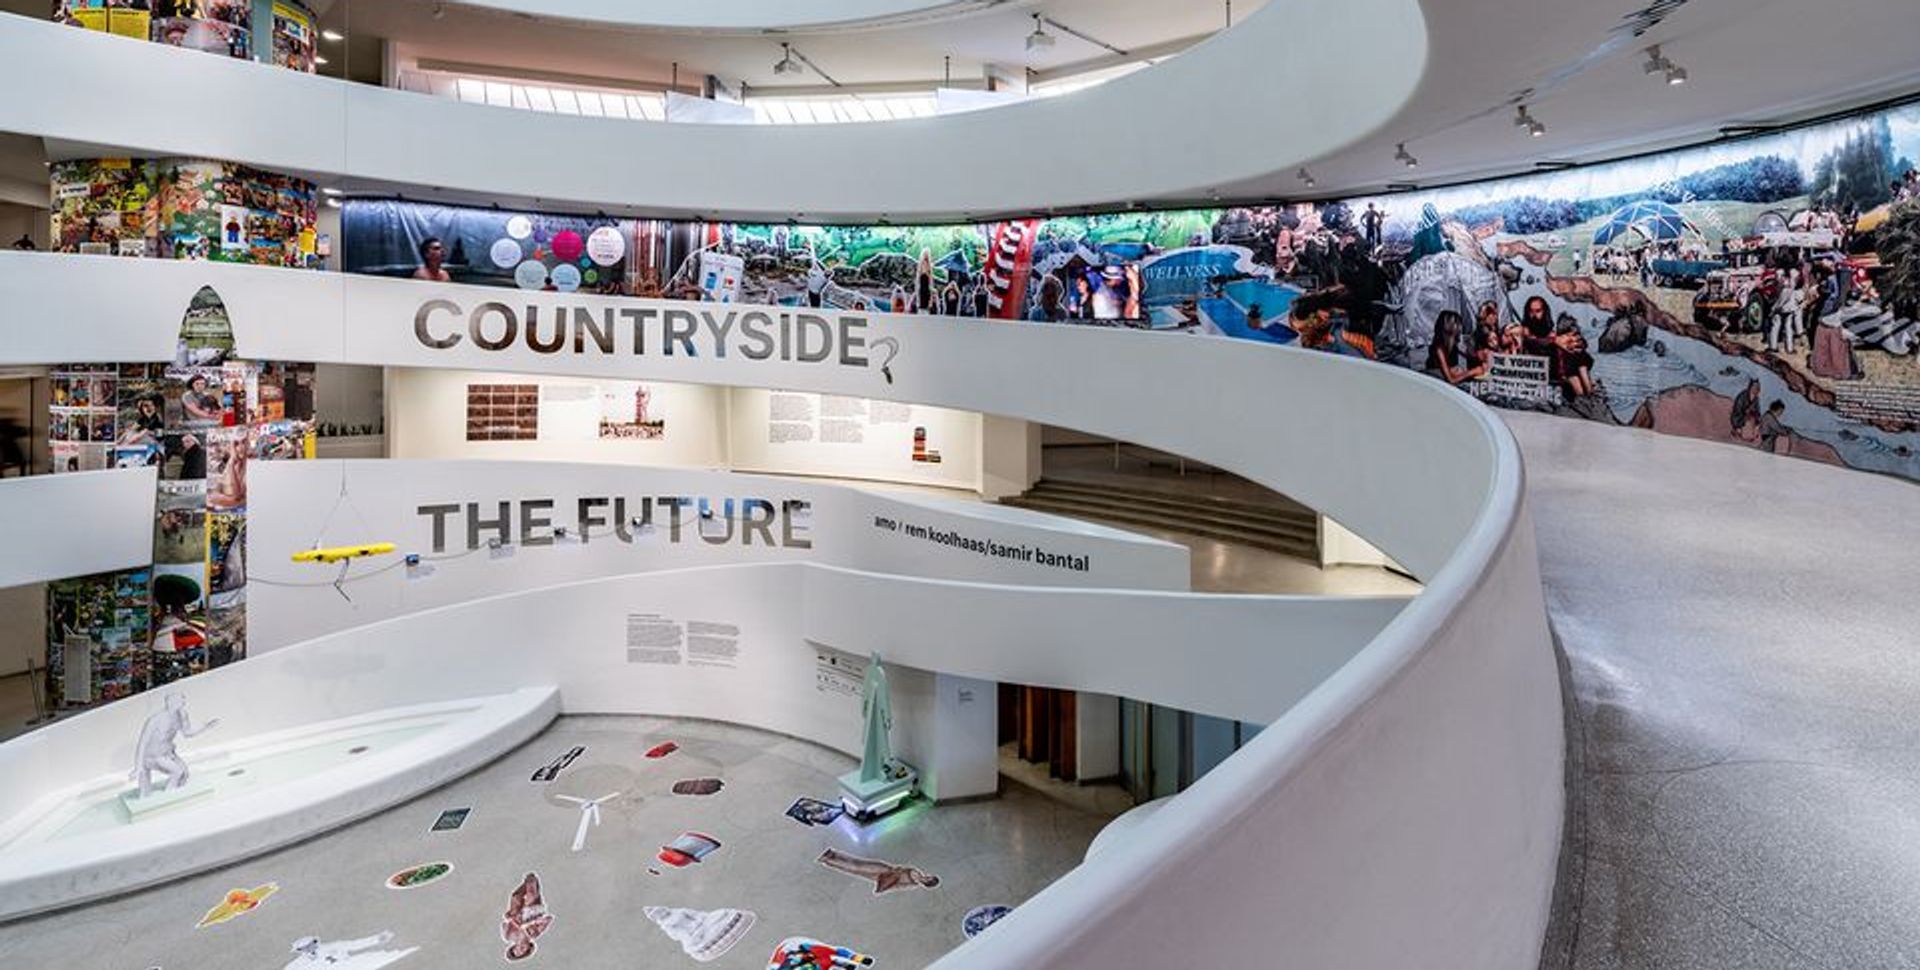 Vue de « Countryside, The Future » au Solomon R. Guggenheim Museum à New York. David Heald. © Solomon R. Guggenheim Foundation.